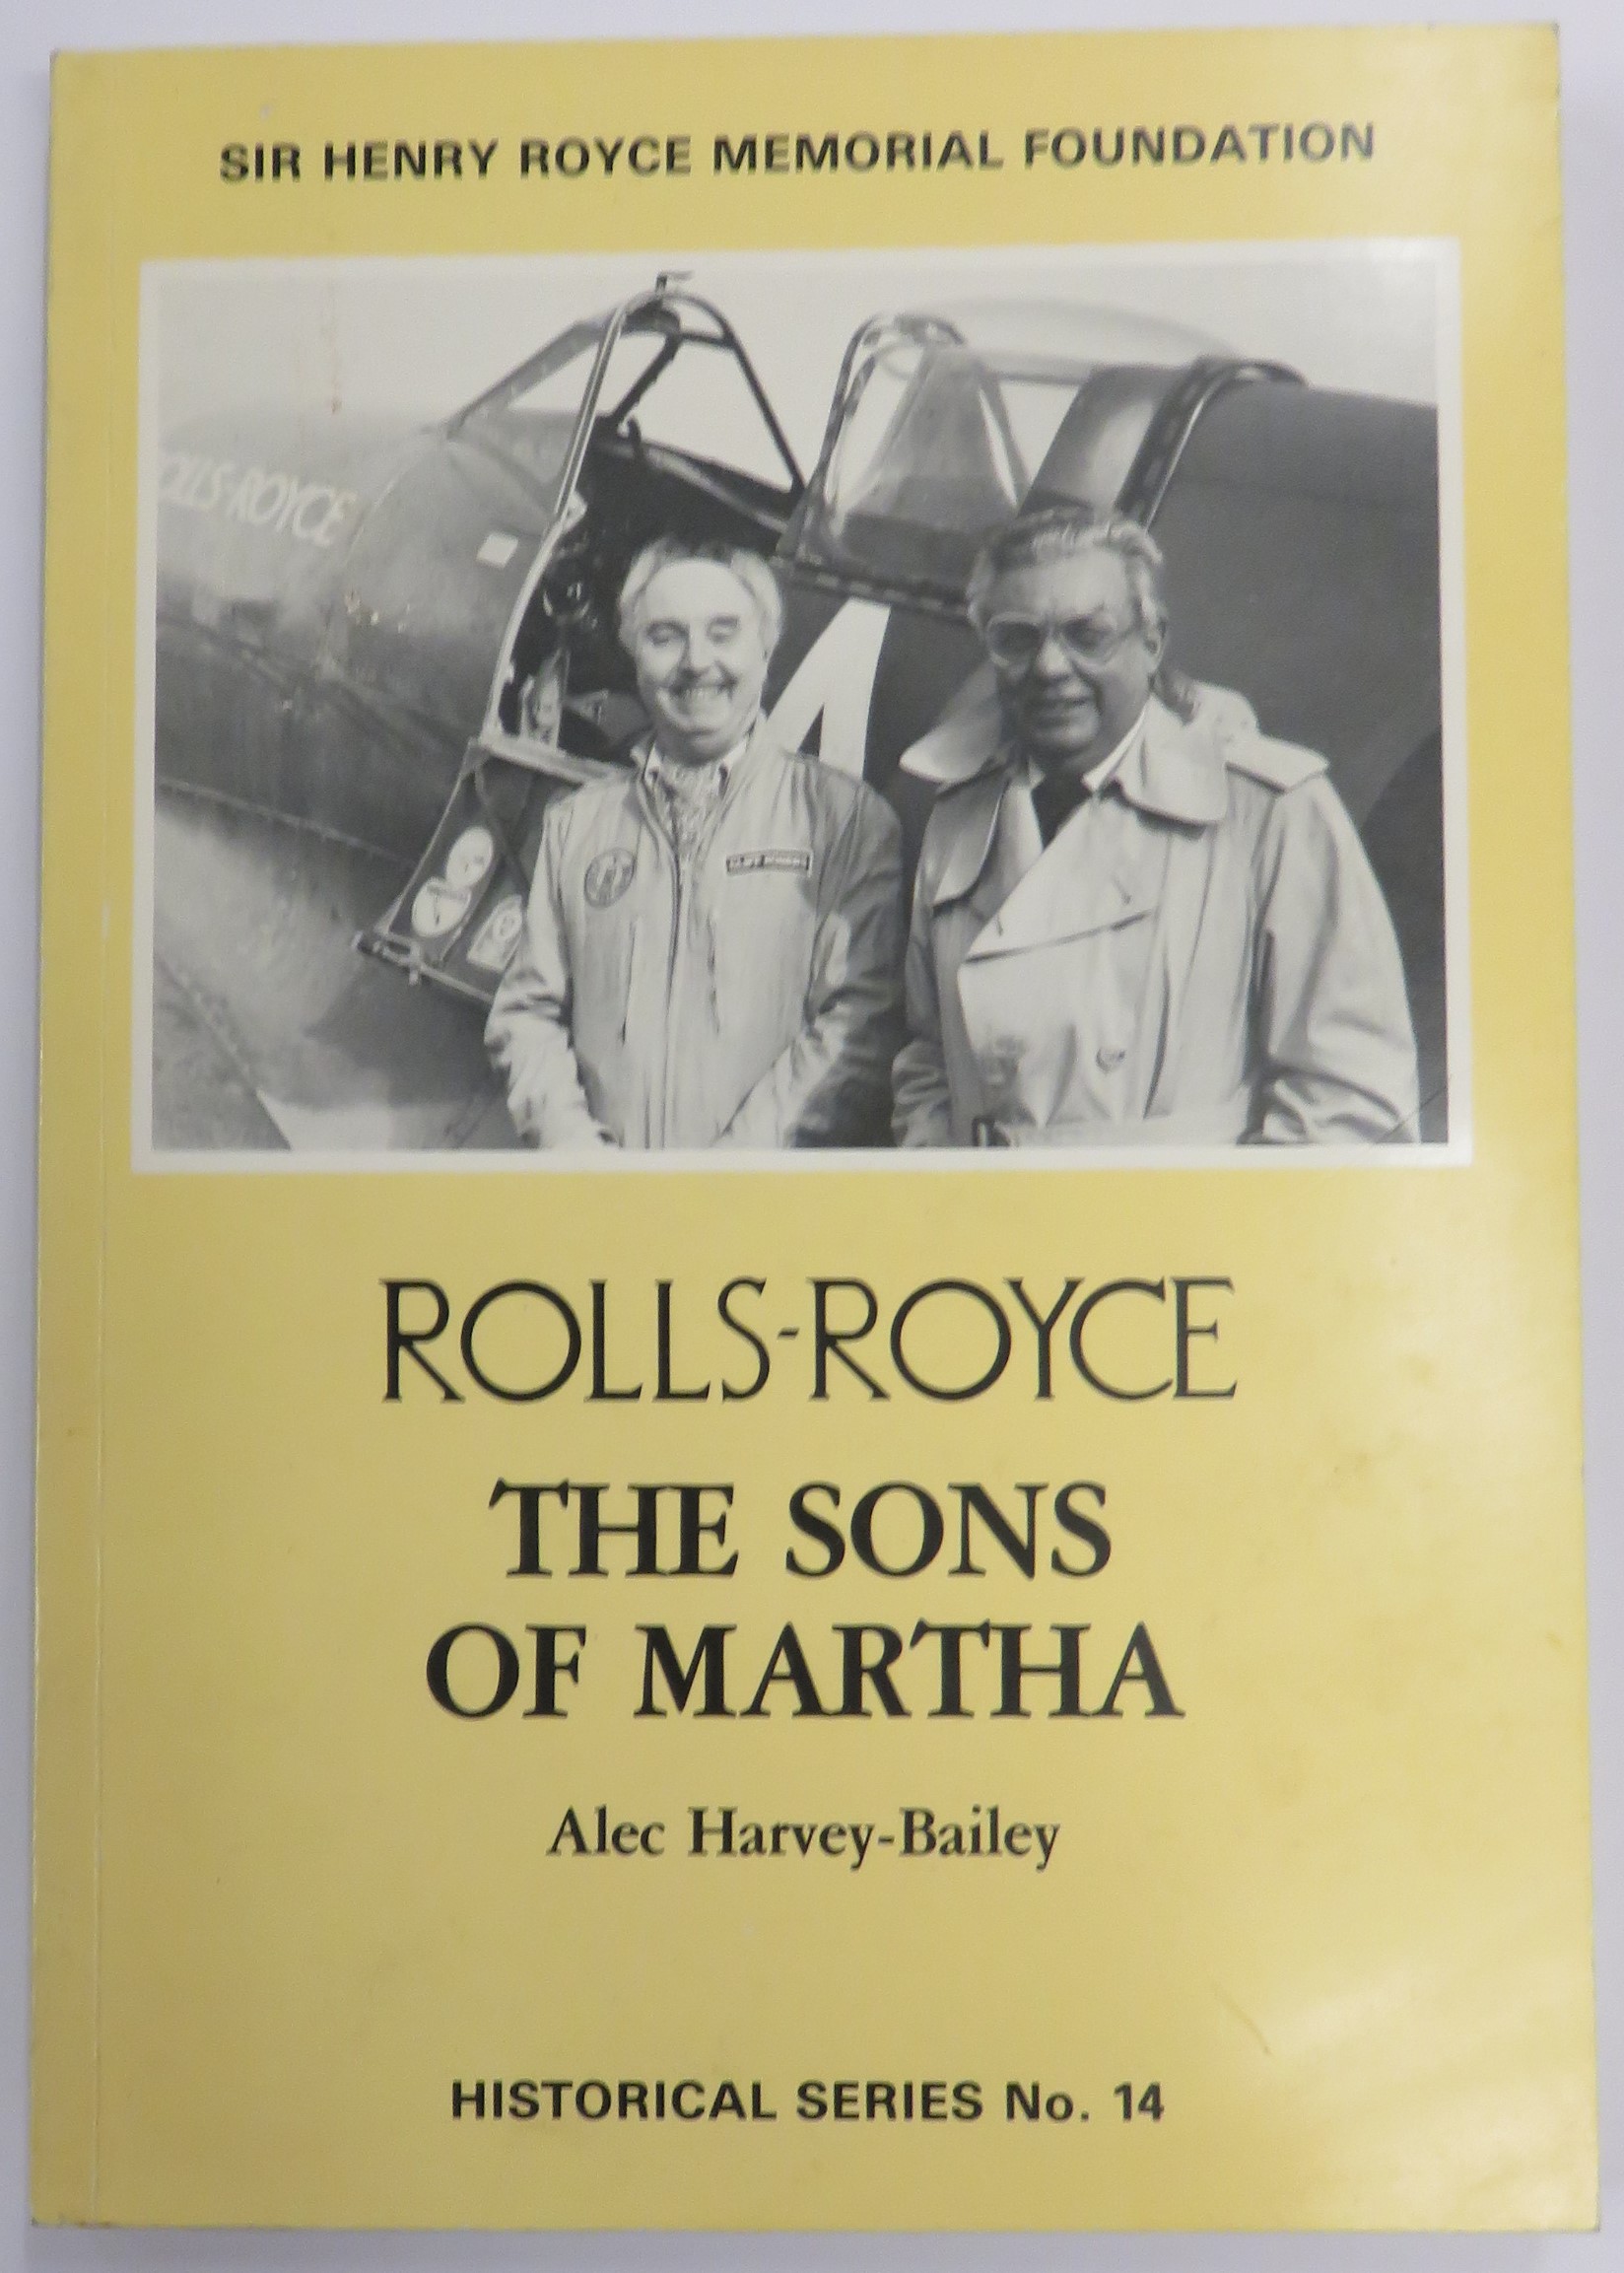 Rolls-Royce The Sons of Martha